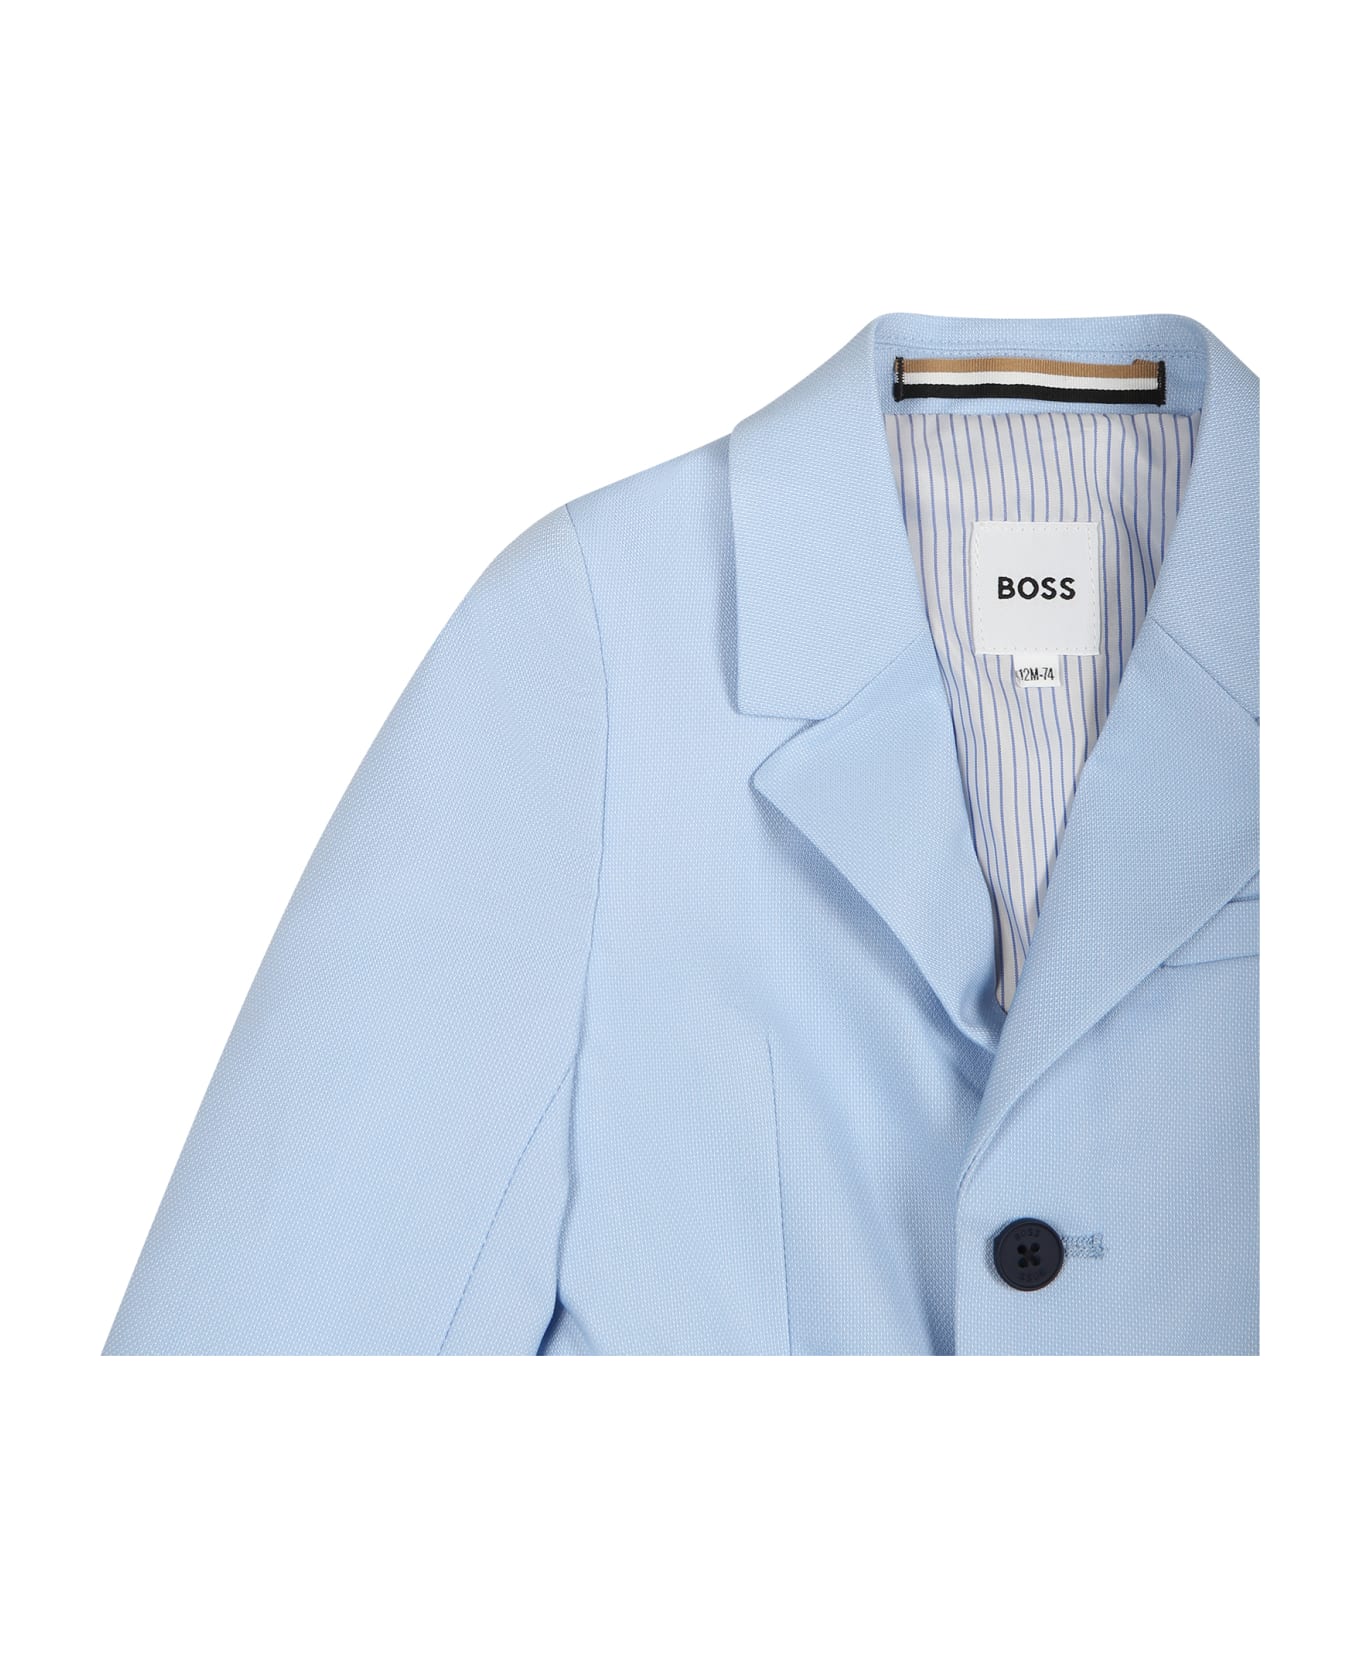 Hugo Boss Sky Blue Jacket For Baby Boy - Light Blue コート＆ジャケット